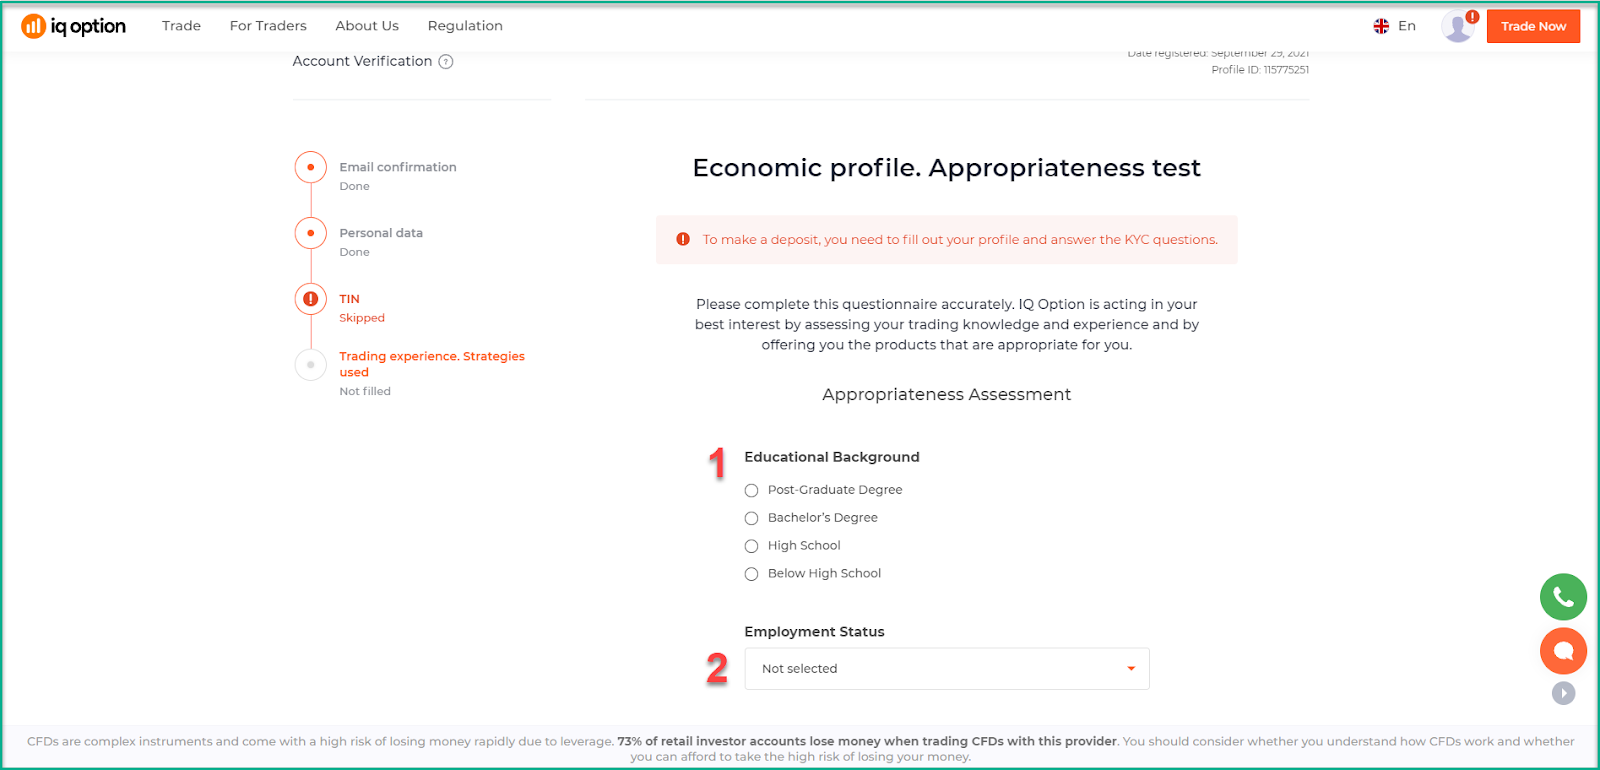 IqBroker Appropriateness Assessment